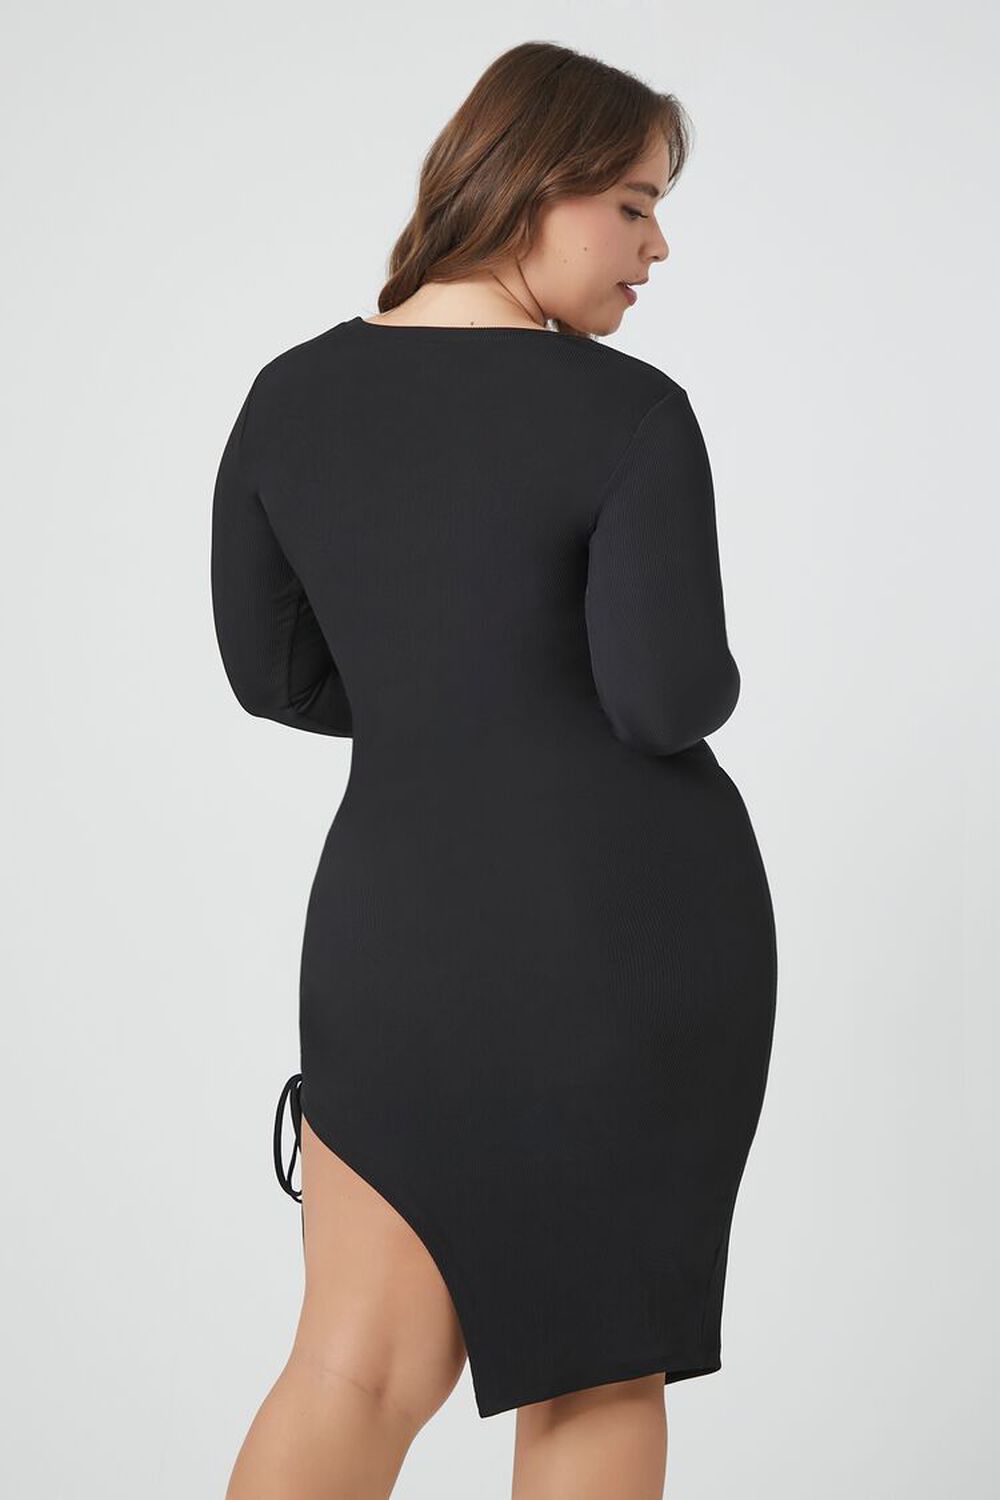 Massini Women Size 1X Stretch Black Drawstring Dress Pant